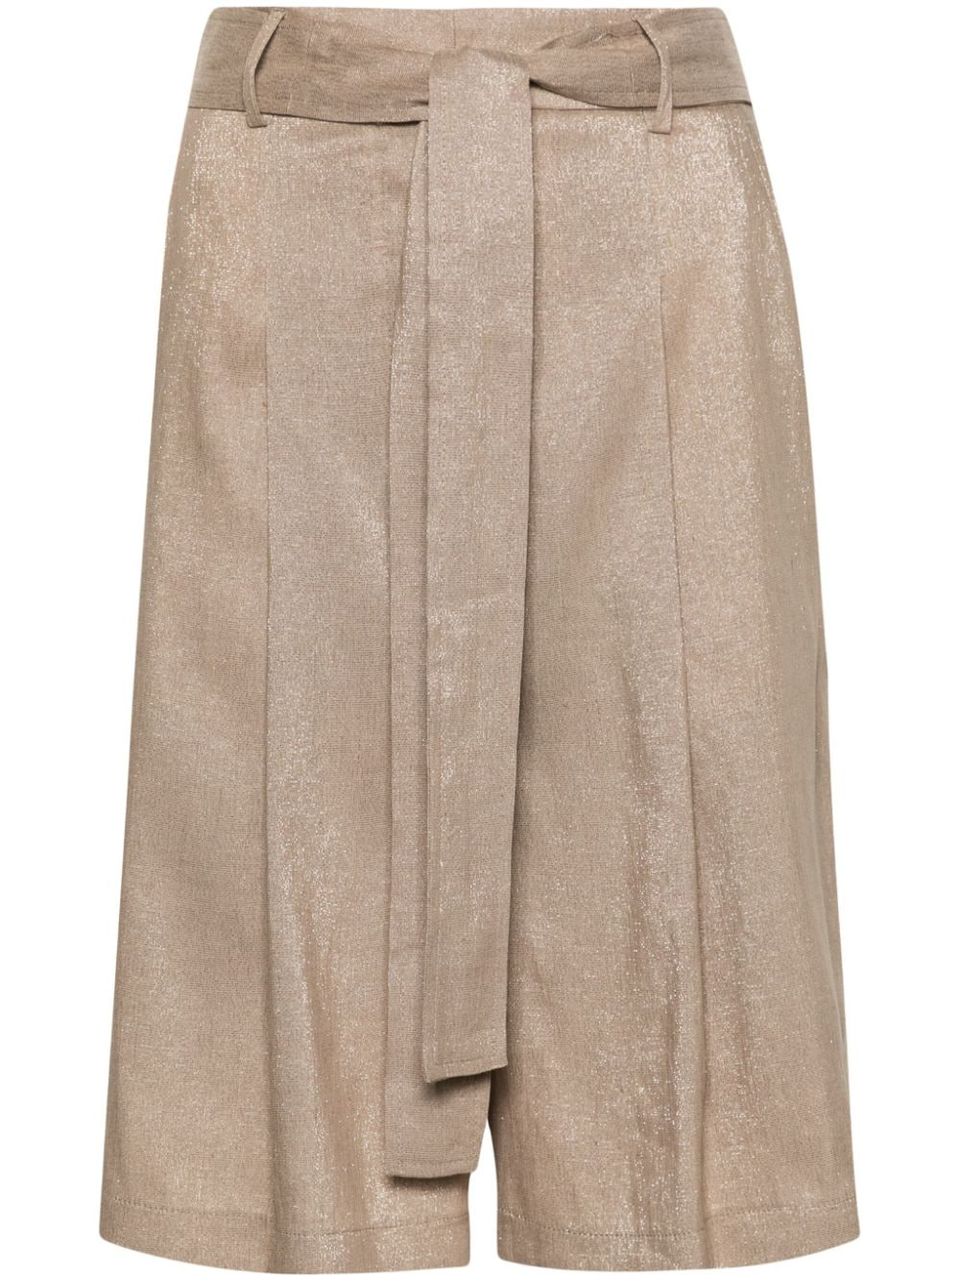 Shorts with lurex details